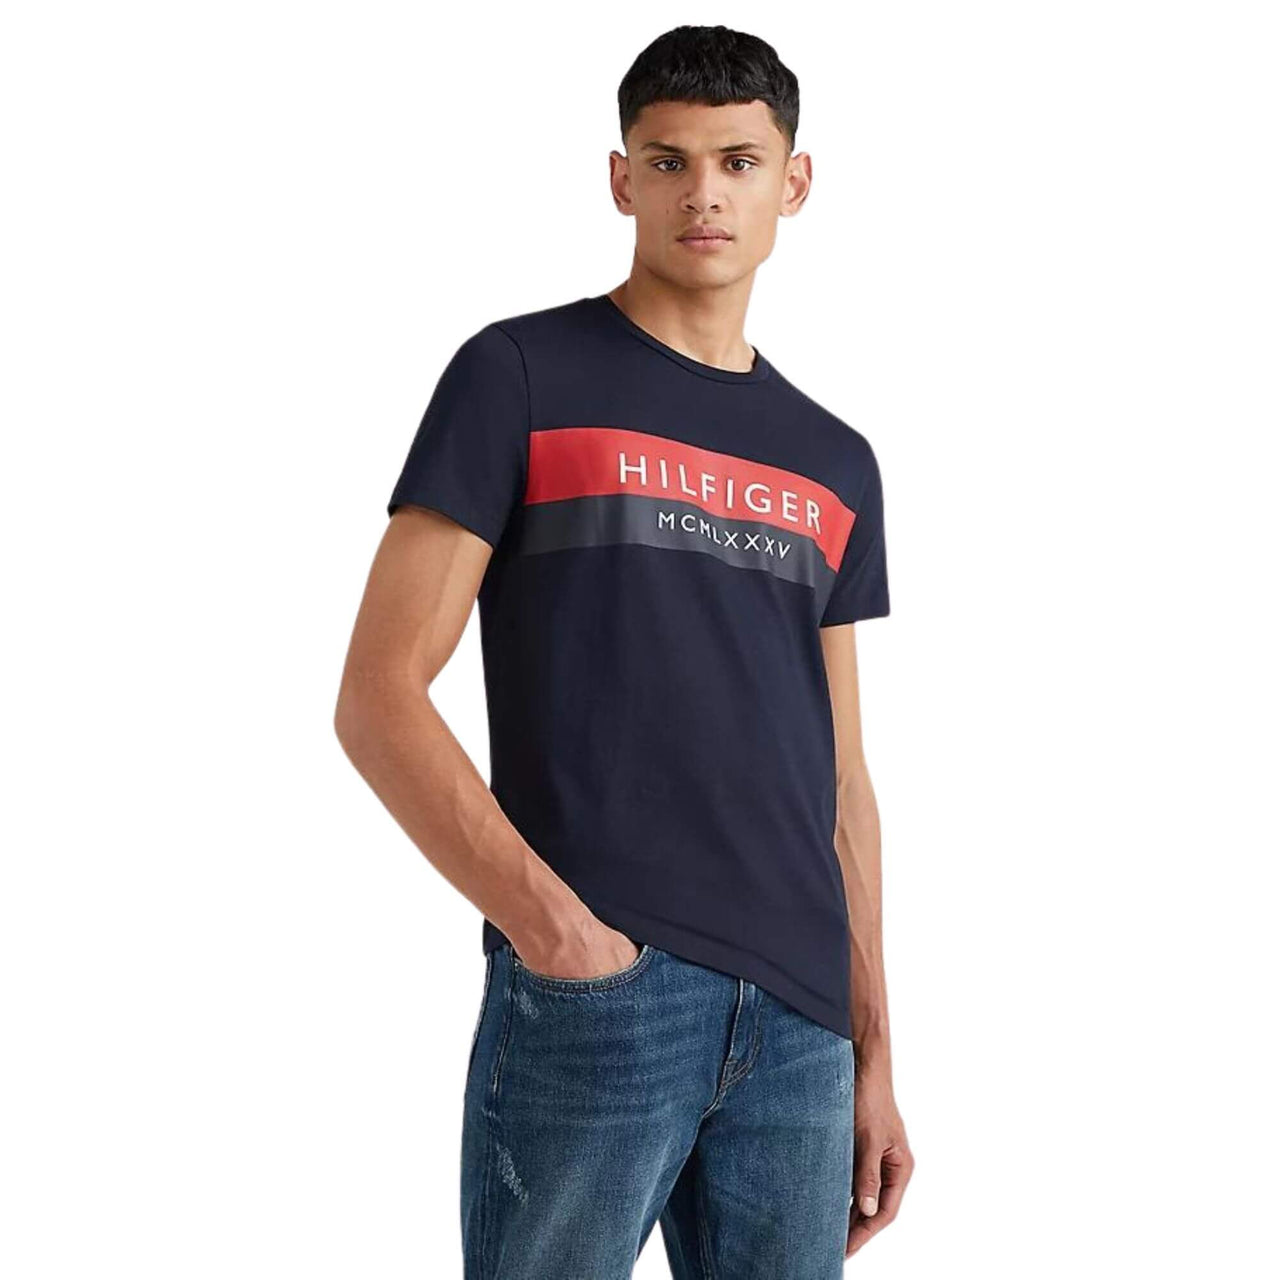 Camisetas Tommy Hilfiger Hombre Two Tone Tee - Medina Menswear®